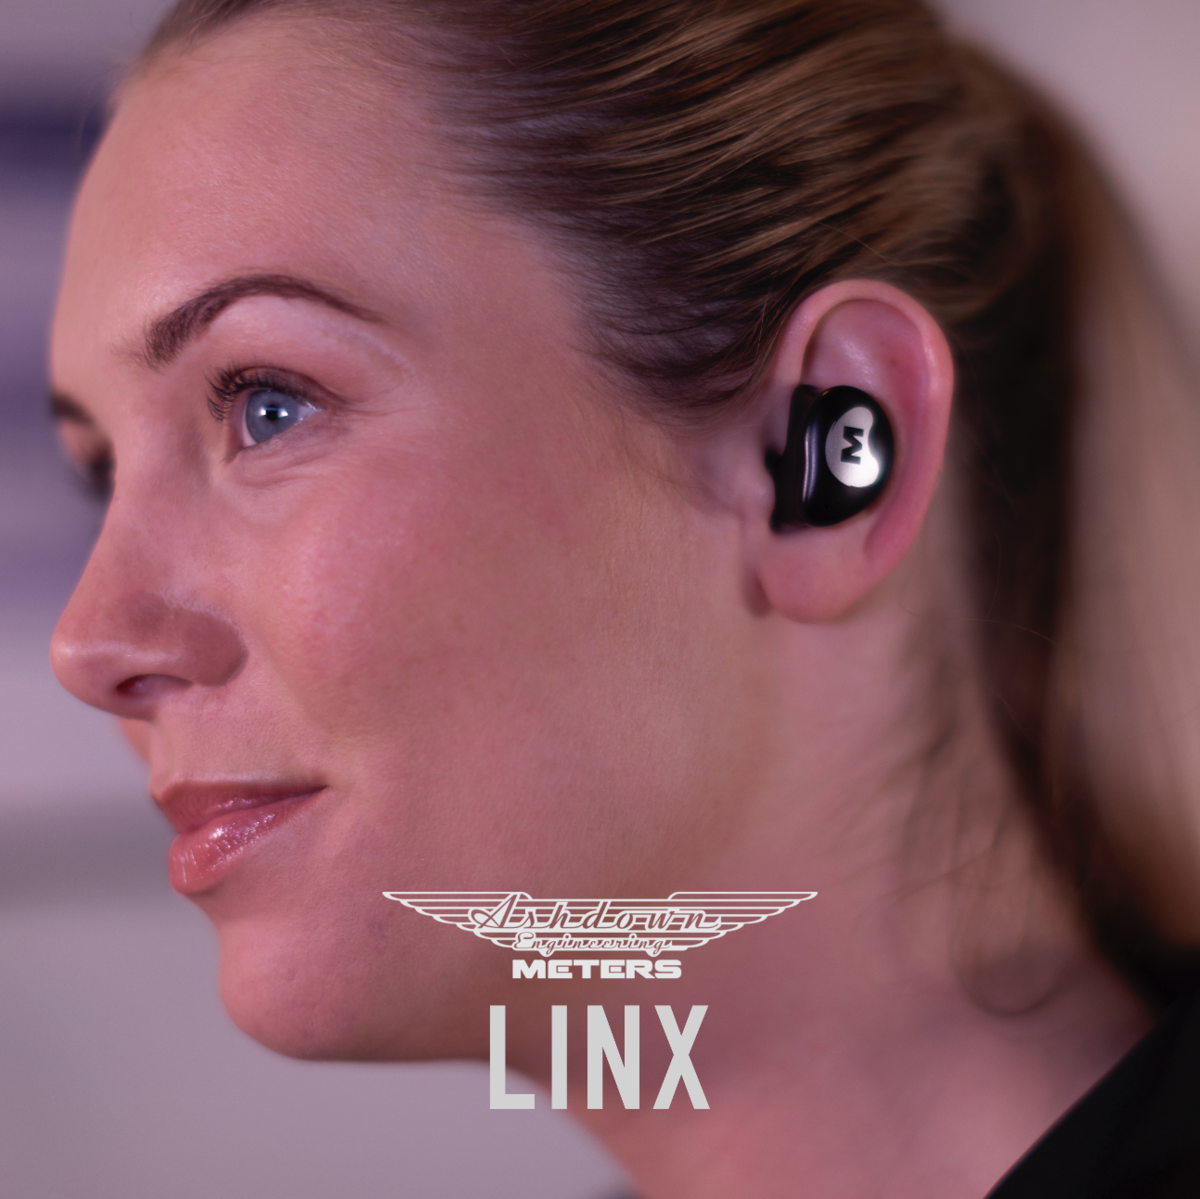 Lady wearing the Ashdown Meters LINX ear buds